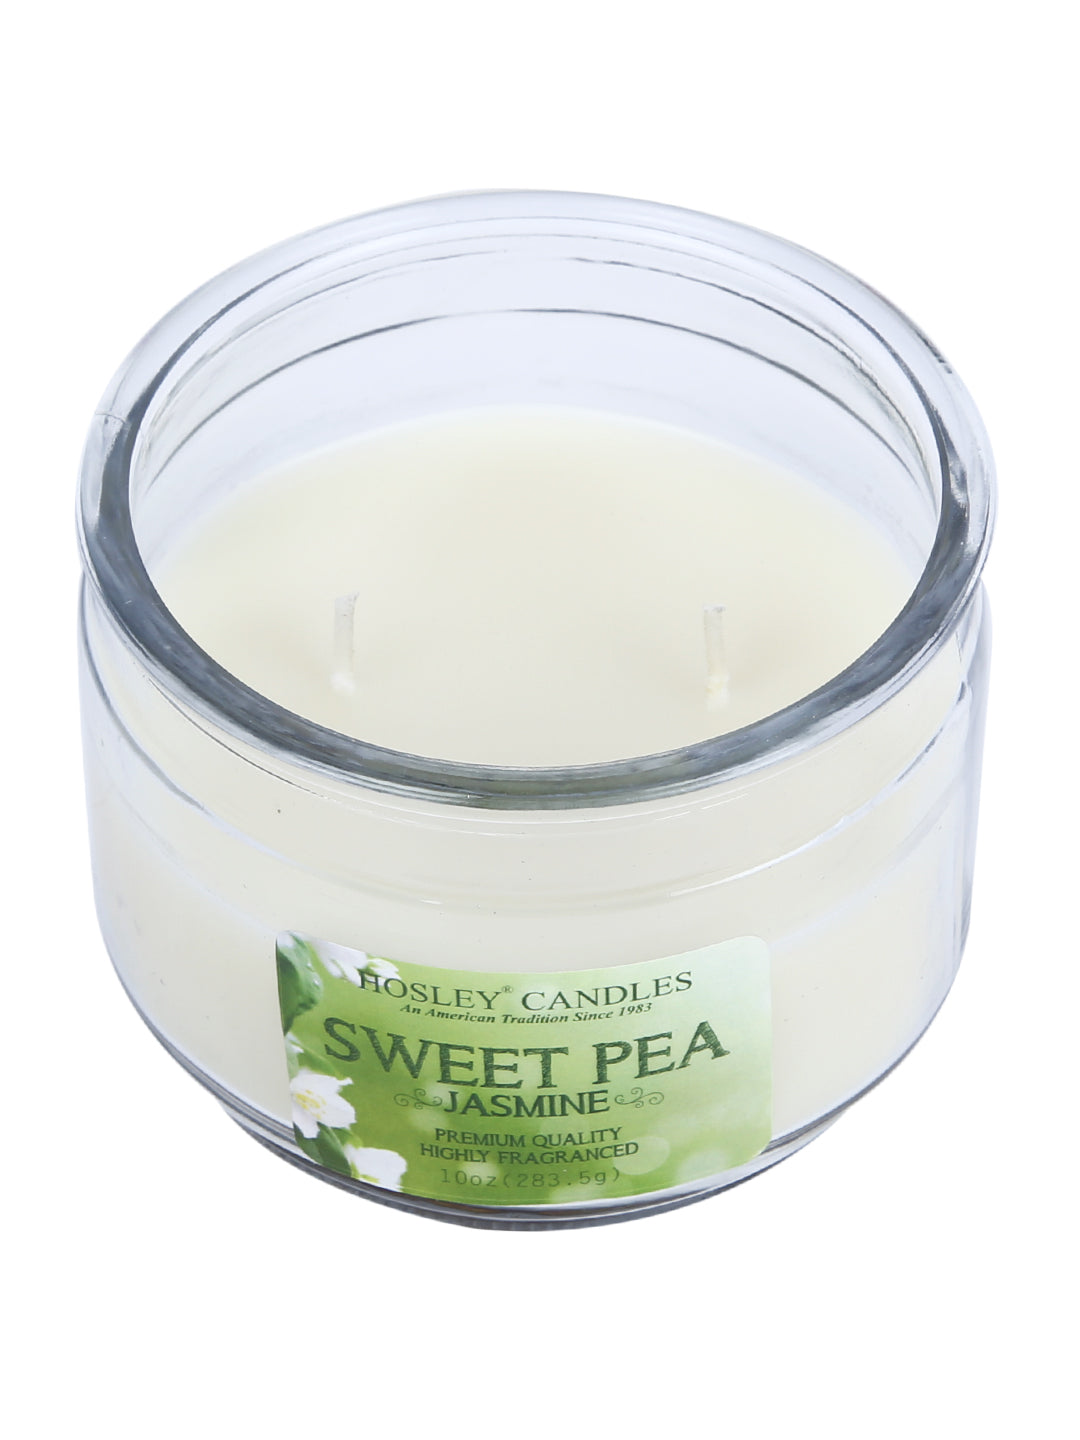 Hosley® Sweet Pea Jasmine Highly Fragranced, 2 Wick, 10 Oz wax, Jar Candle